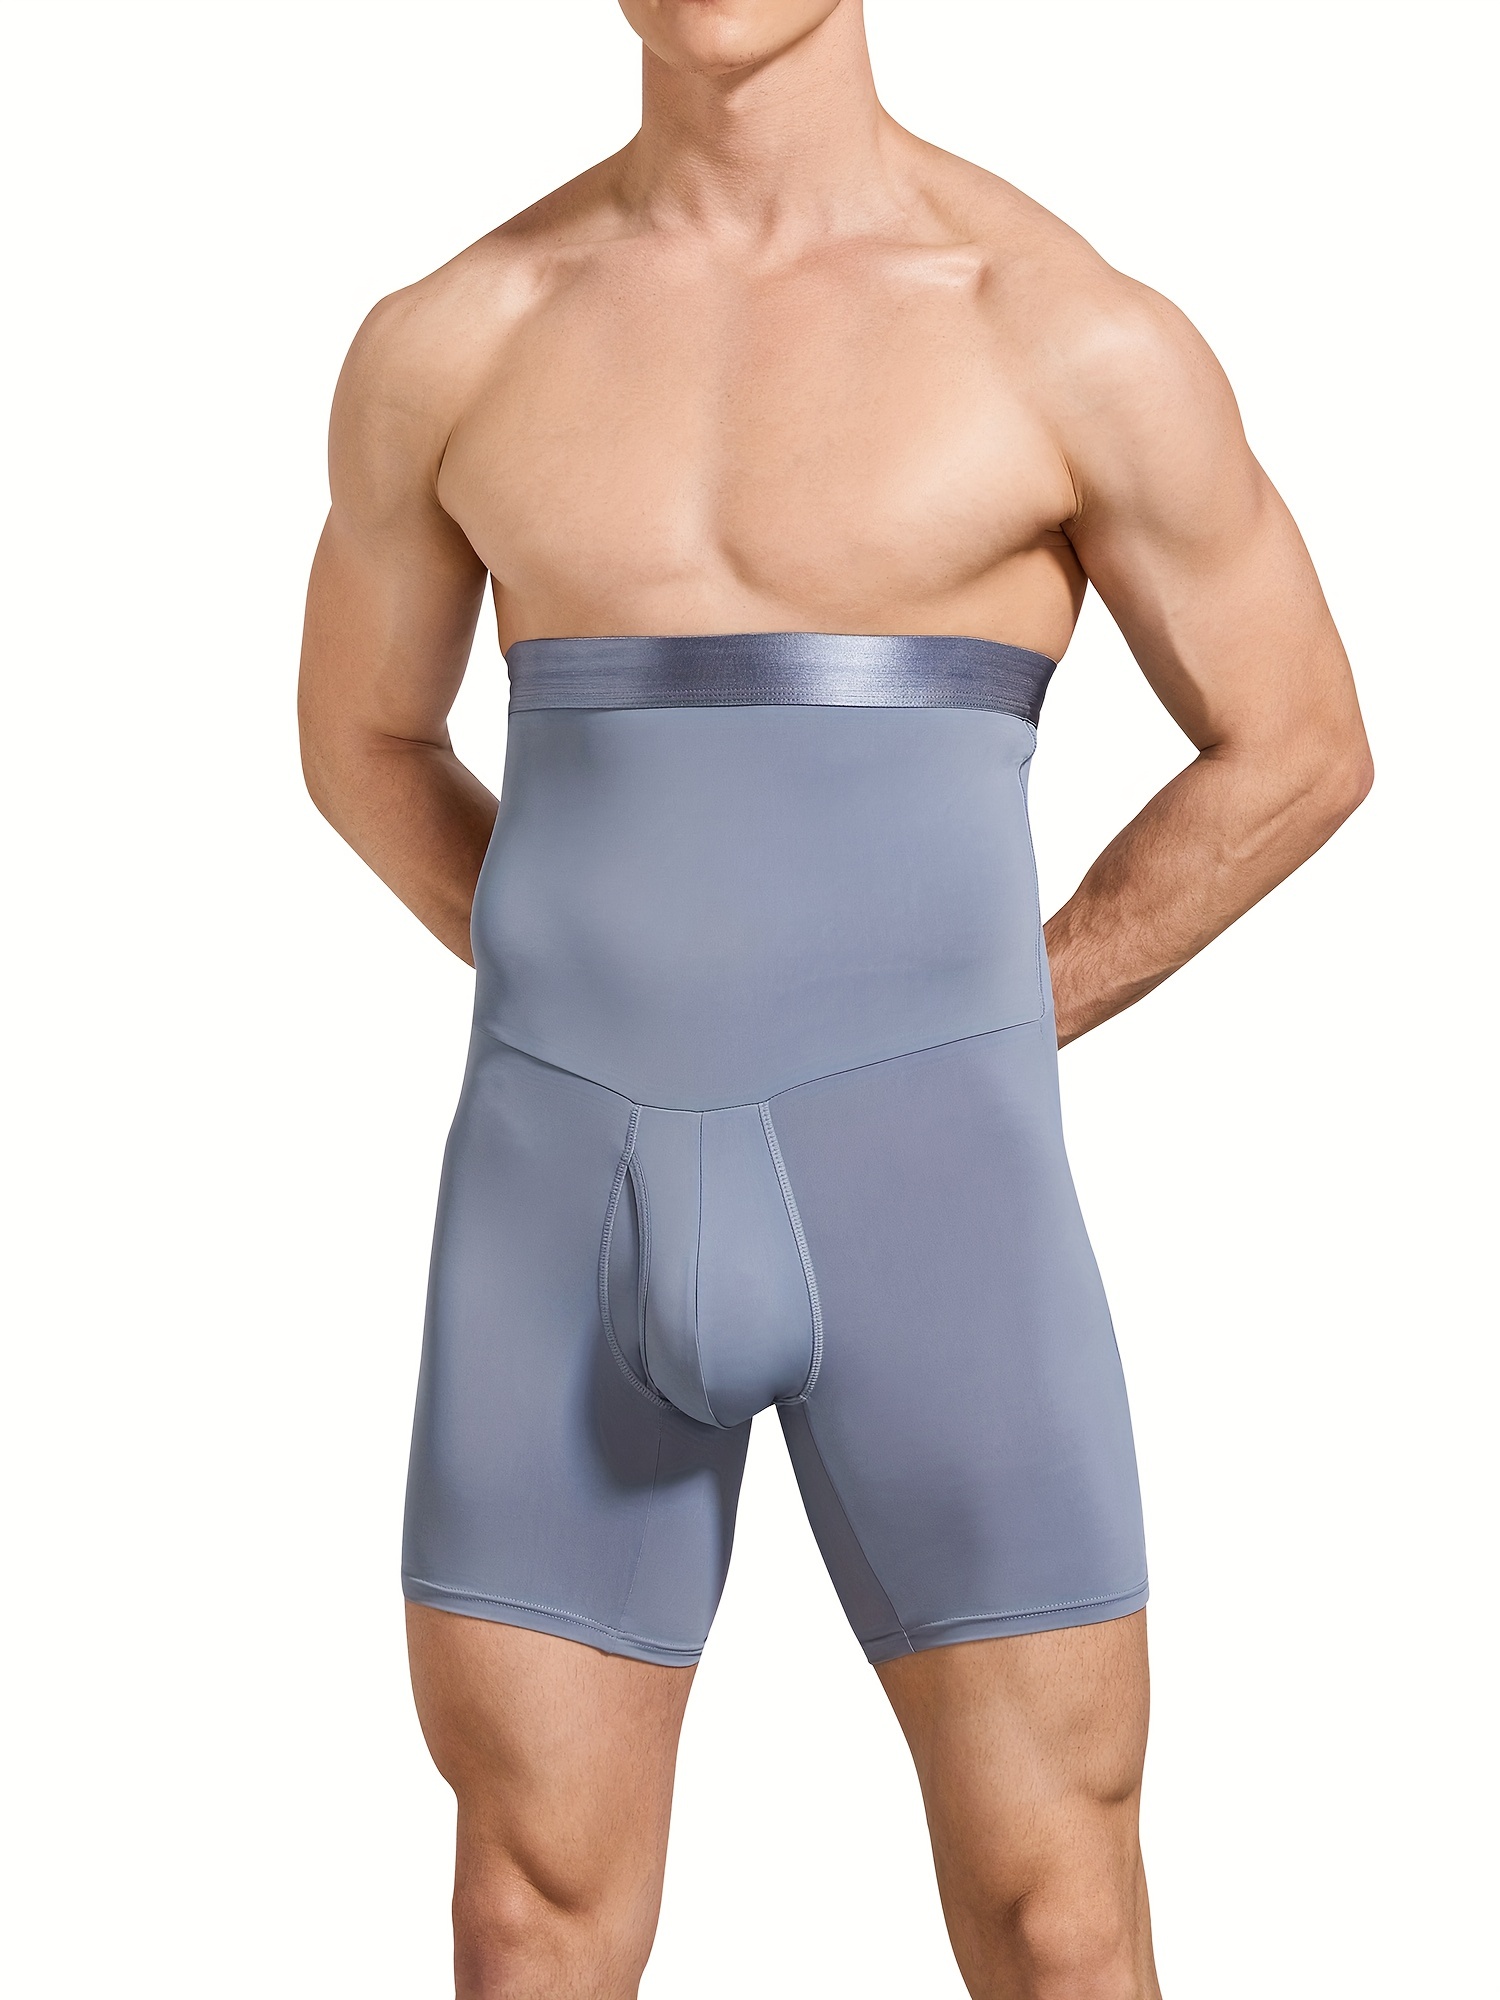 Men's Compression High Waist Boxer Shorts Belly Control Girdle